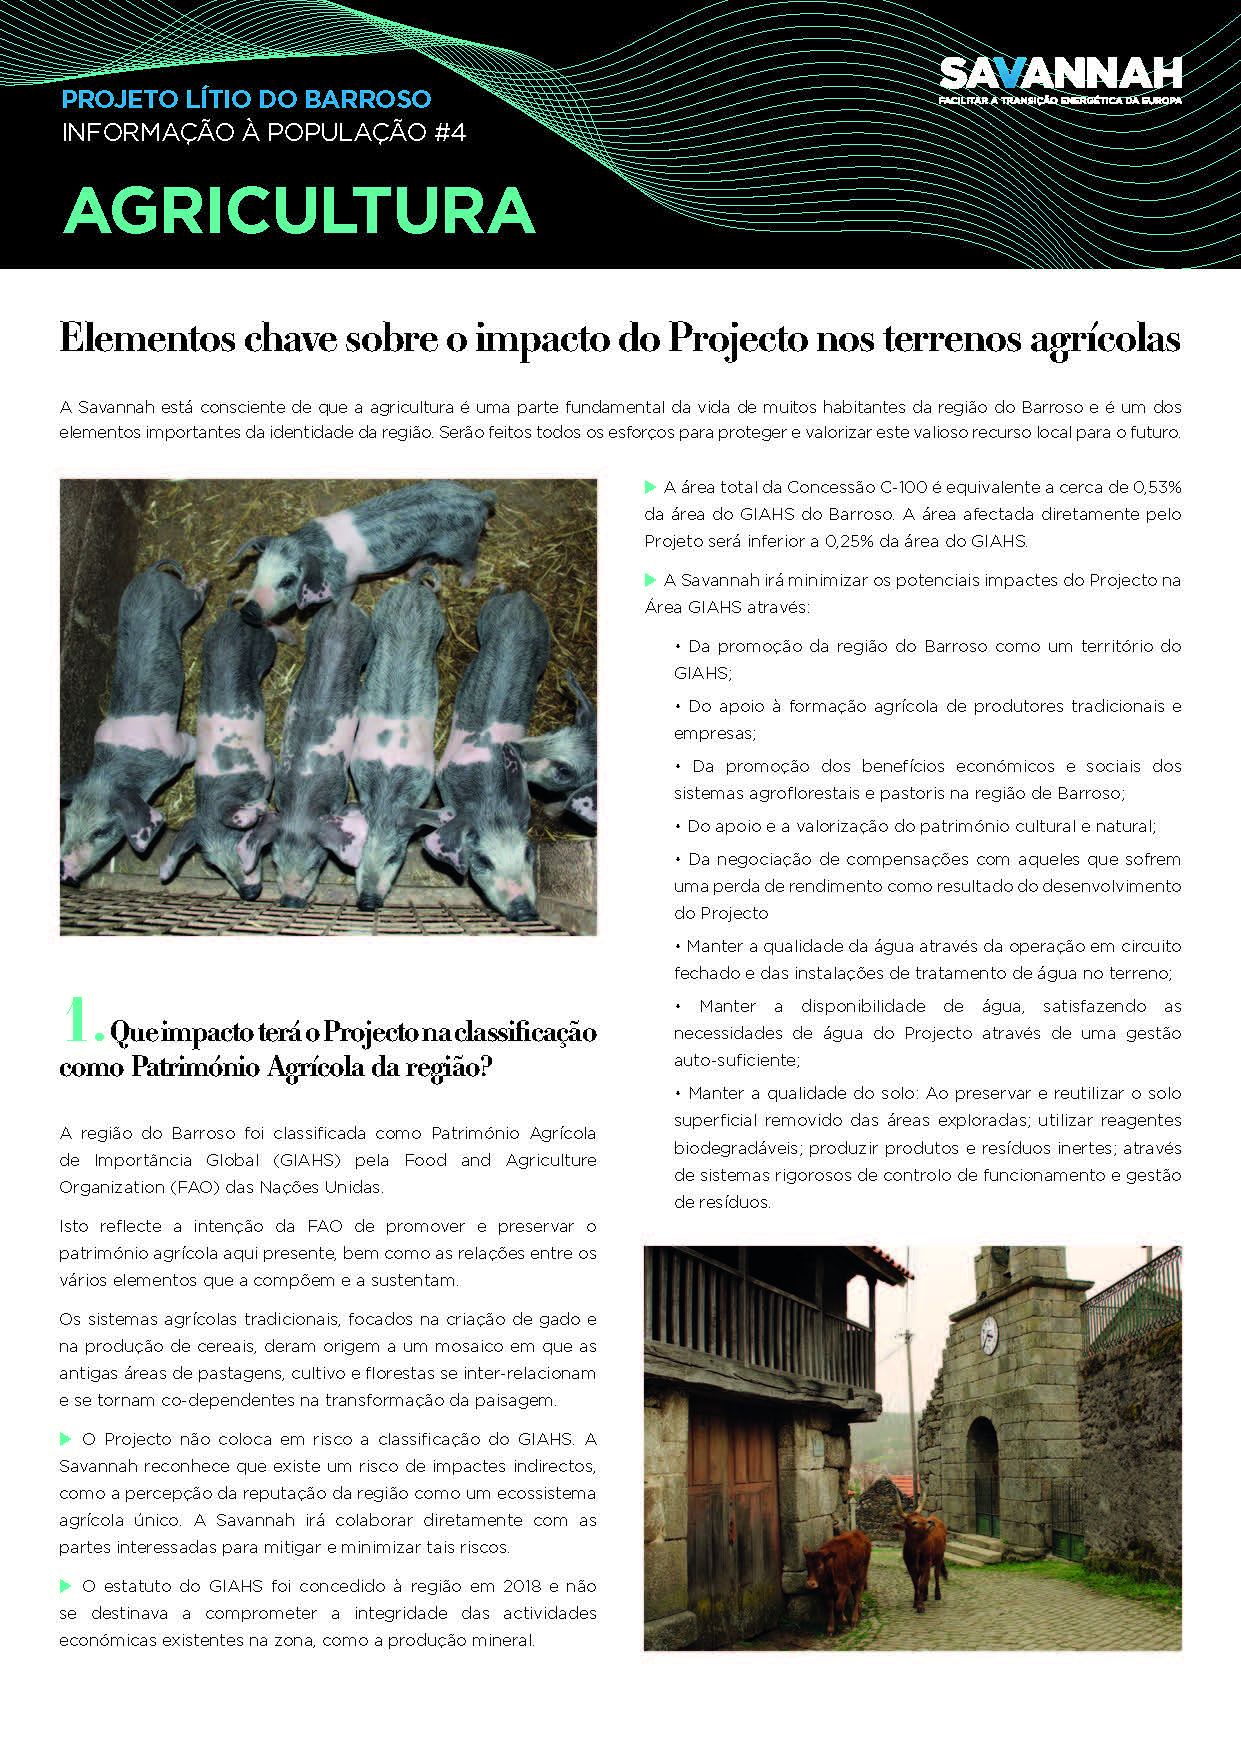 4. Folha Informativa sobre o Projecto Lítio do Barroso - Agricultura